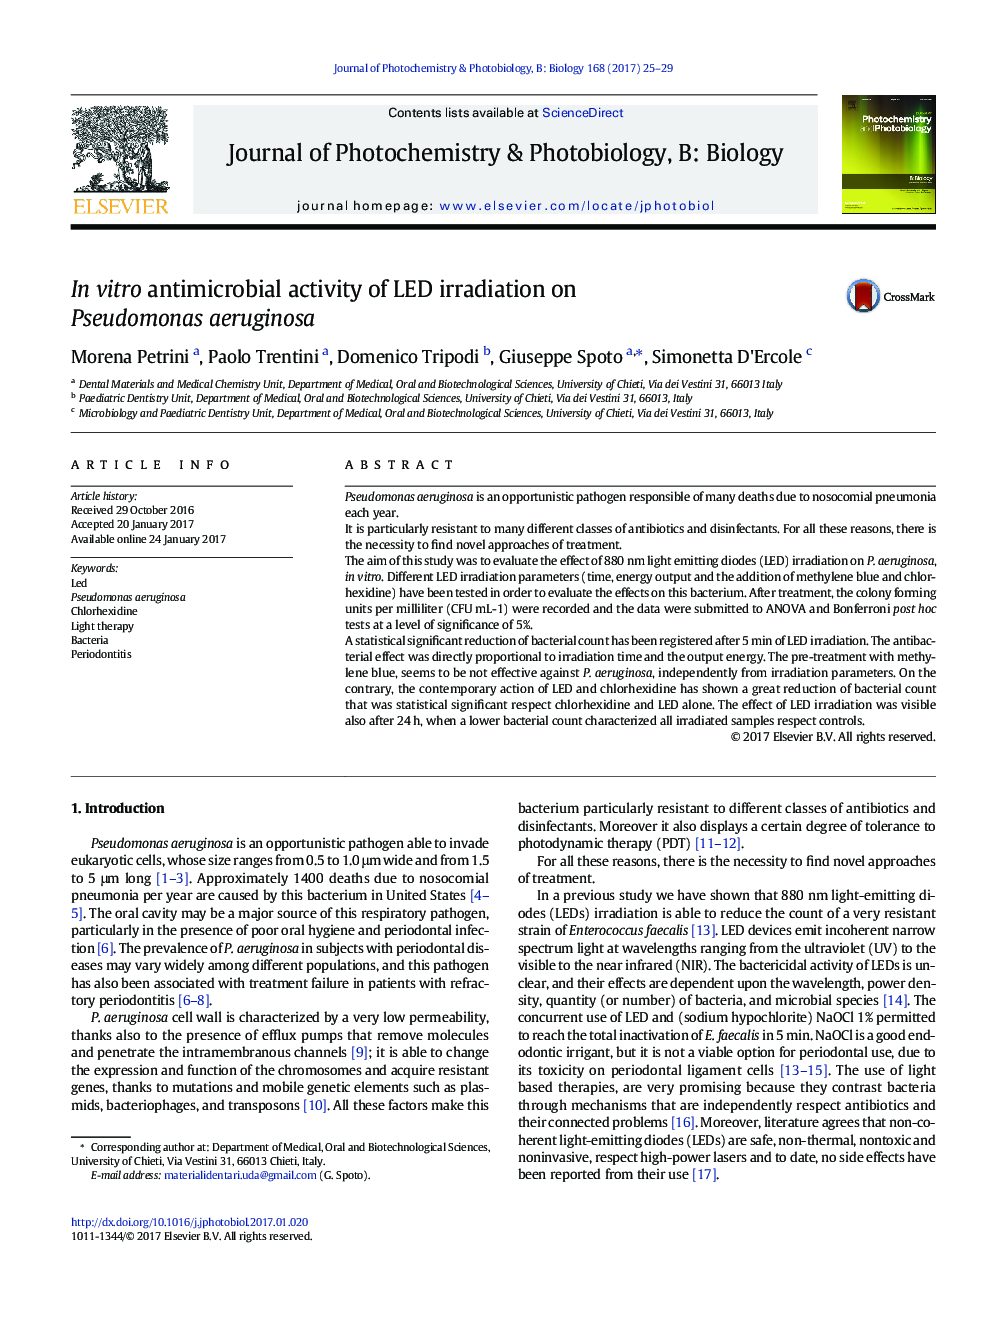 In vitro antimicrobial activity of LED irradiation on Pseudomonas aeruginosa